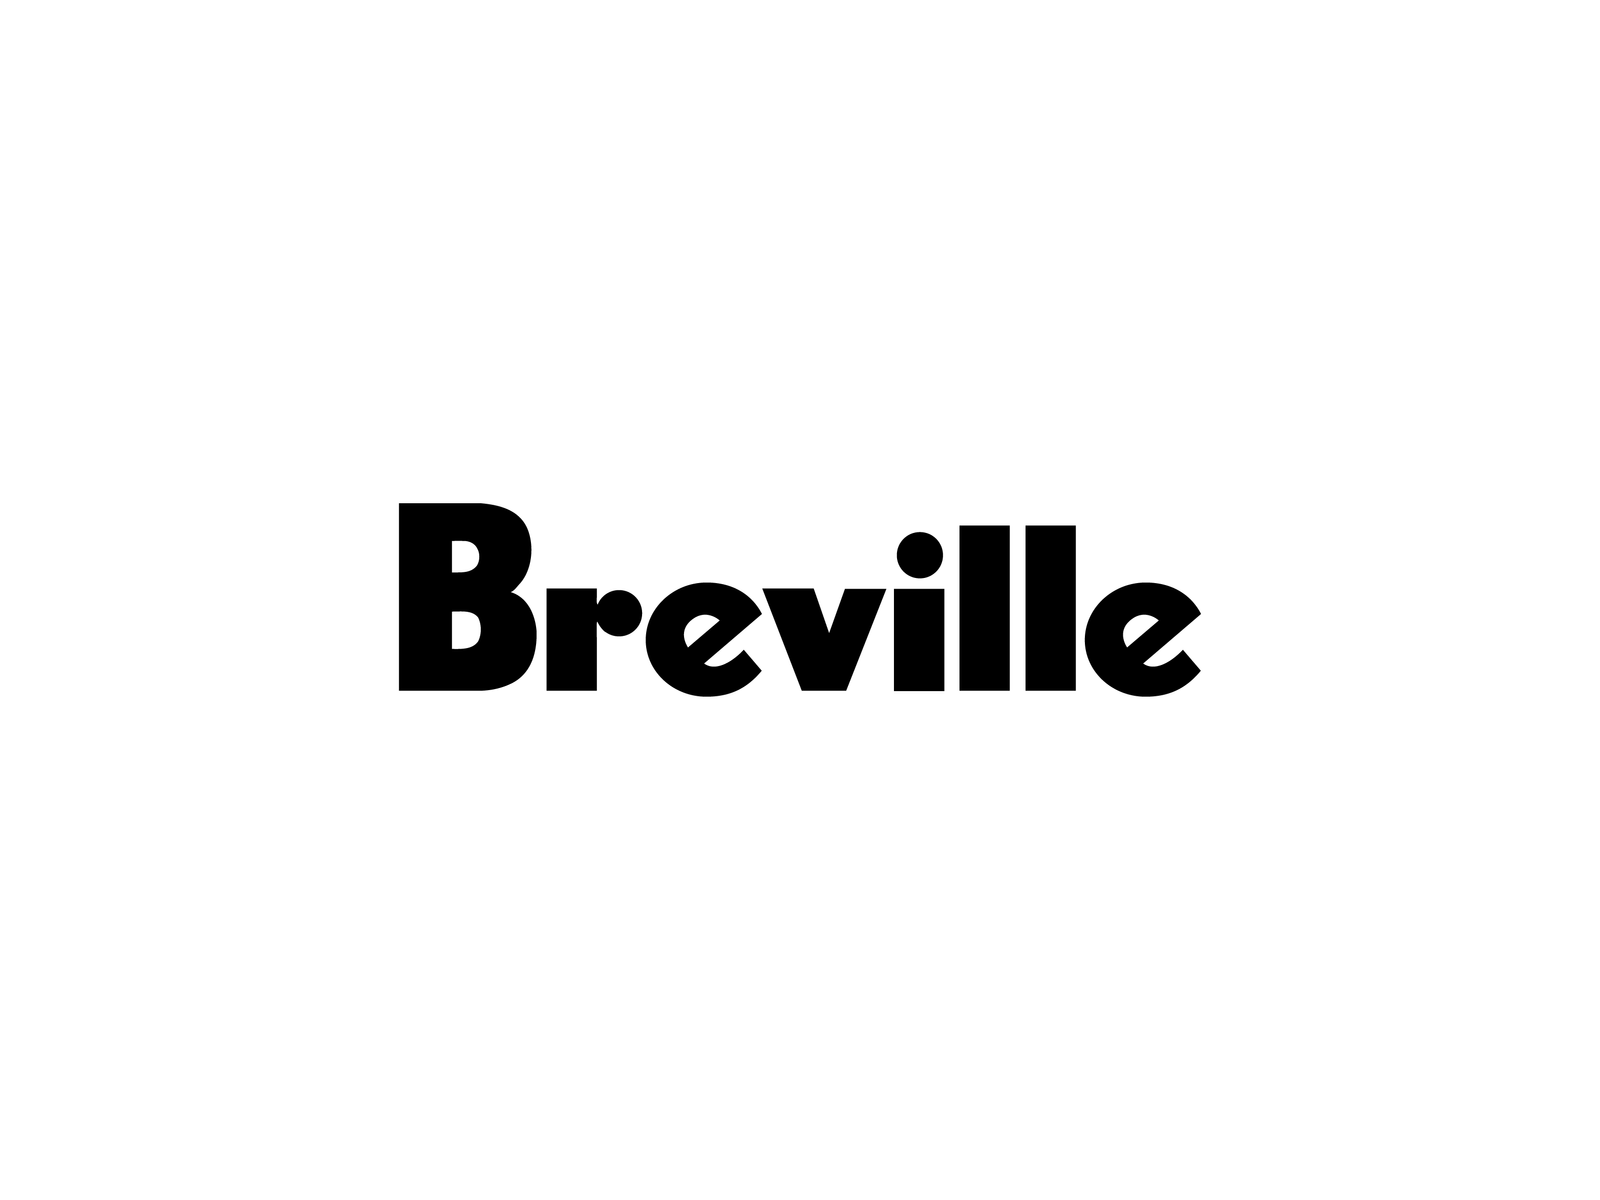 Breville logo design by Augustus Rivers Brightman